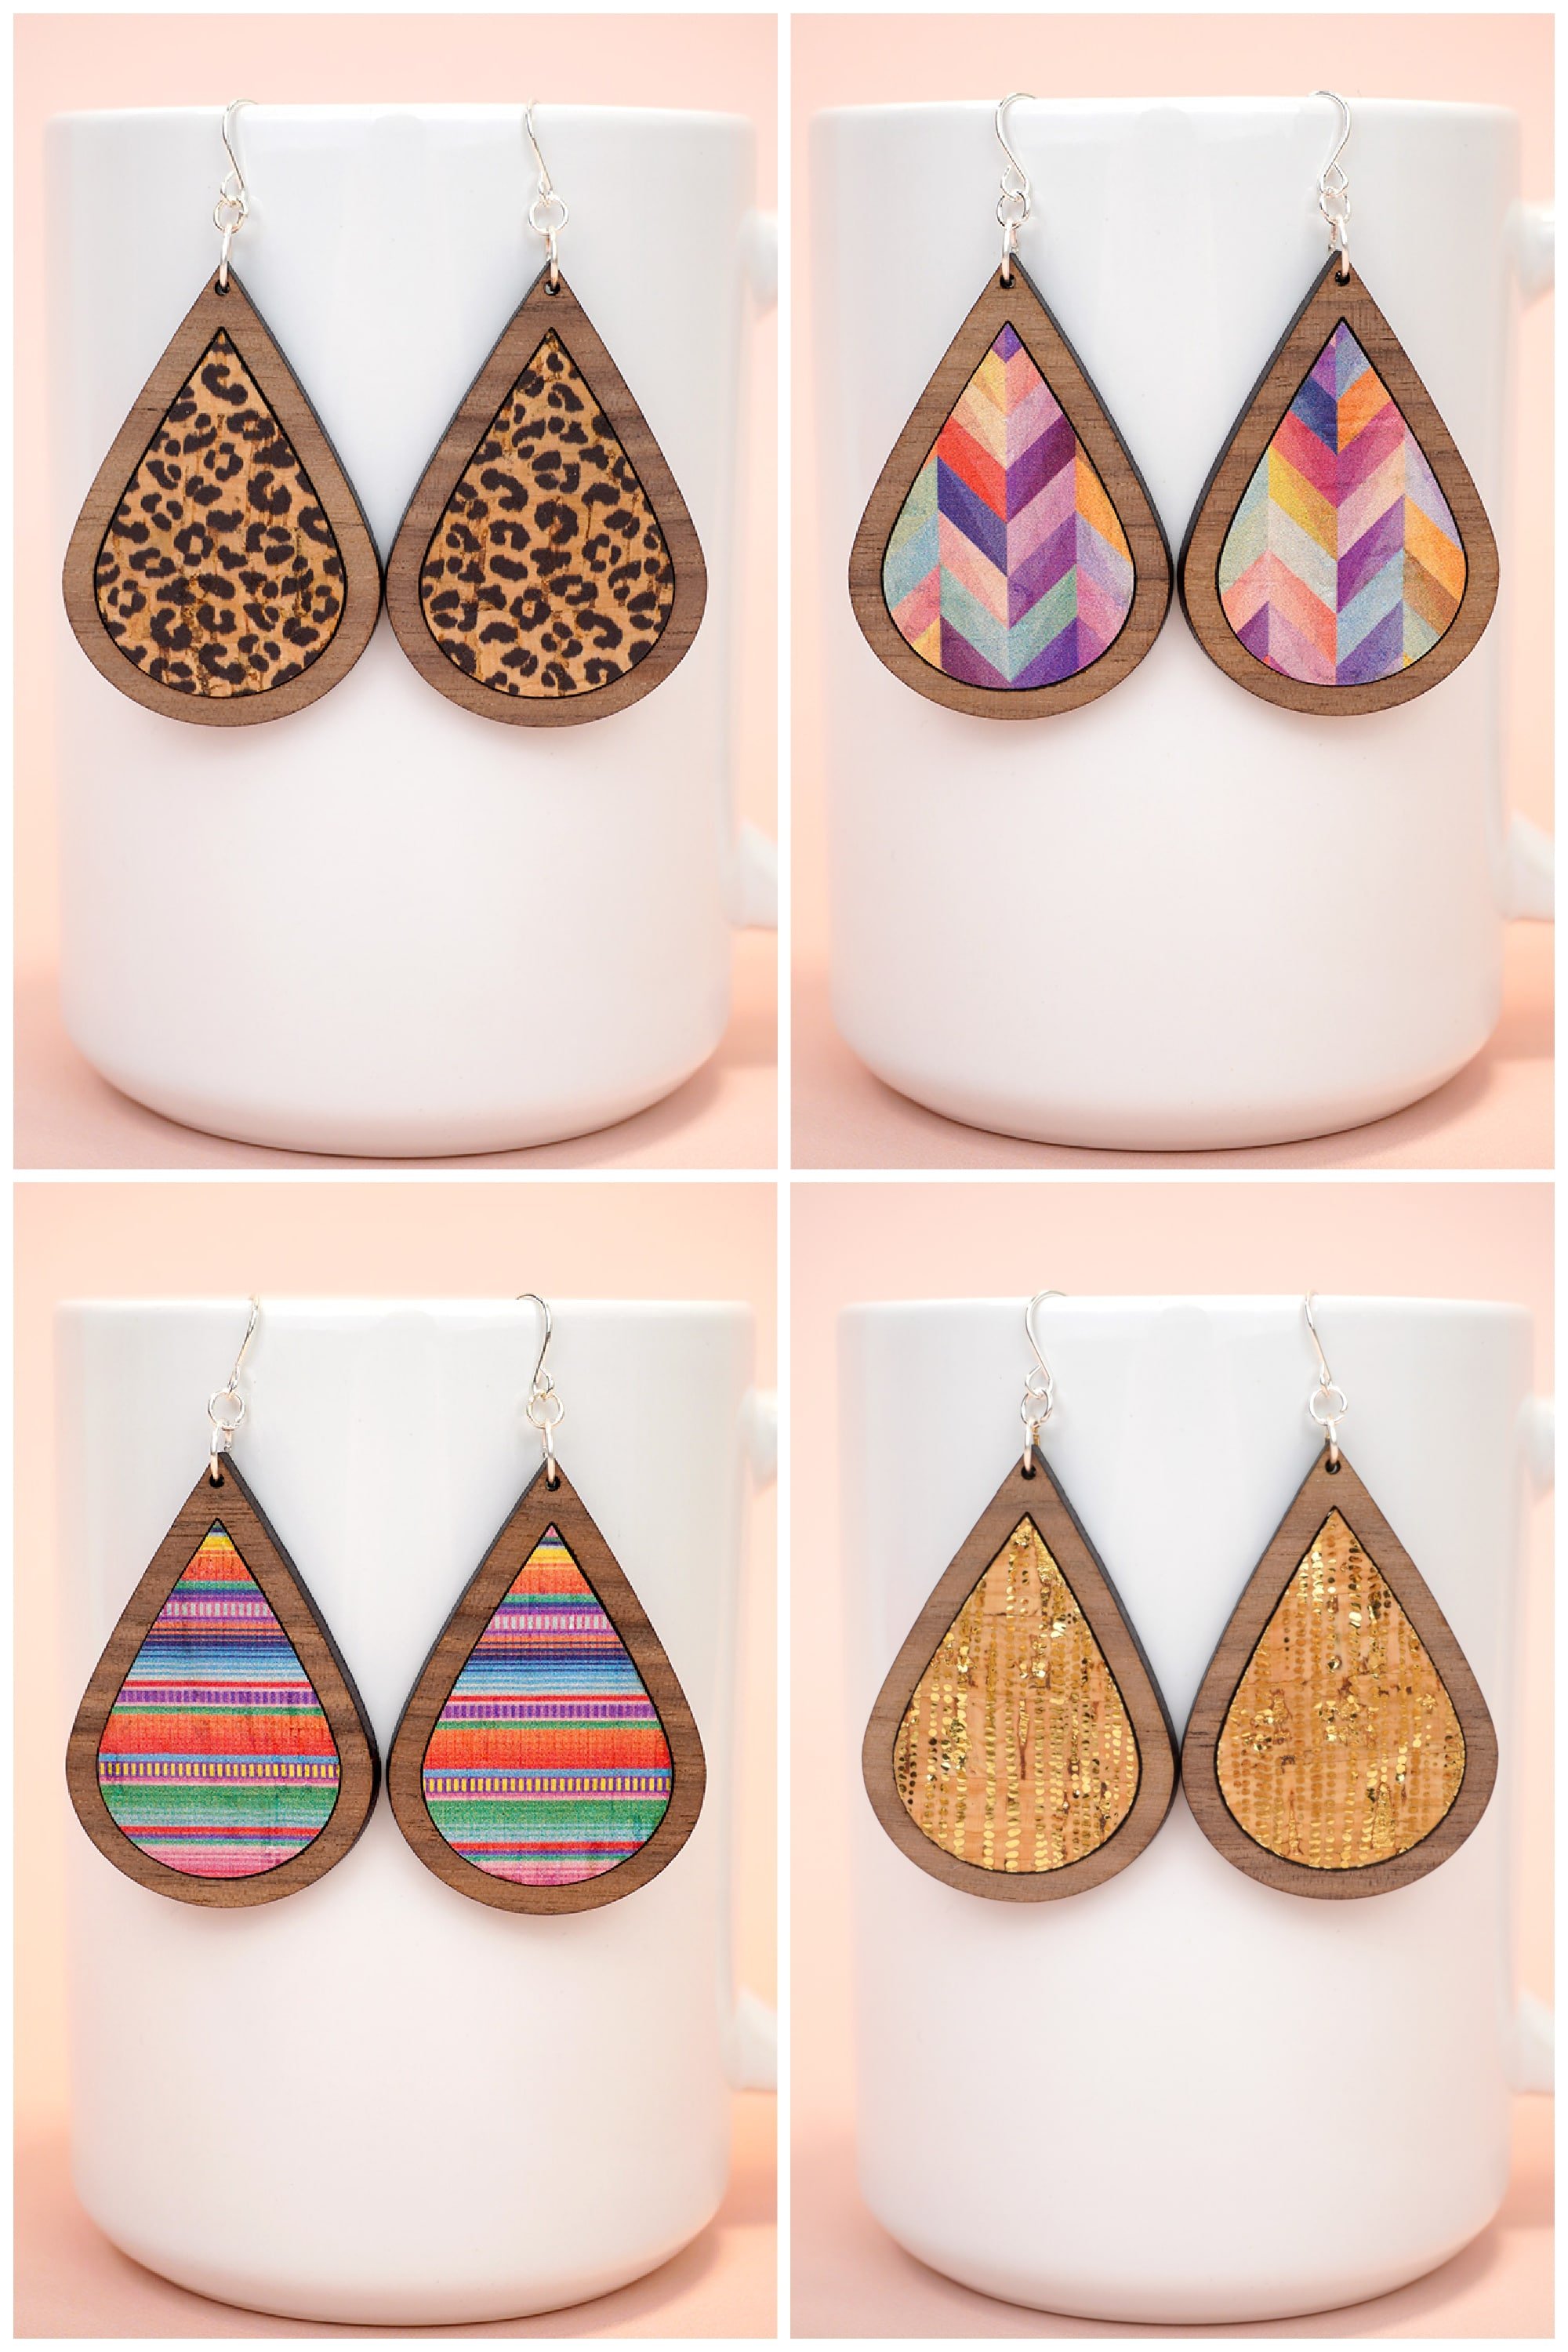 Wood Hoop Earrings orange dots wood earrings Gift Ideas Women Trendy Earrings Wood earrings lightweight Wooden earrings